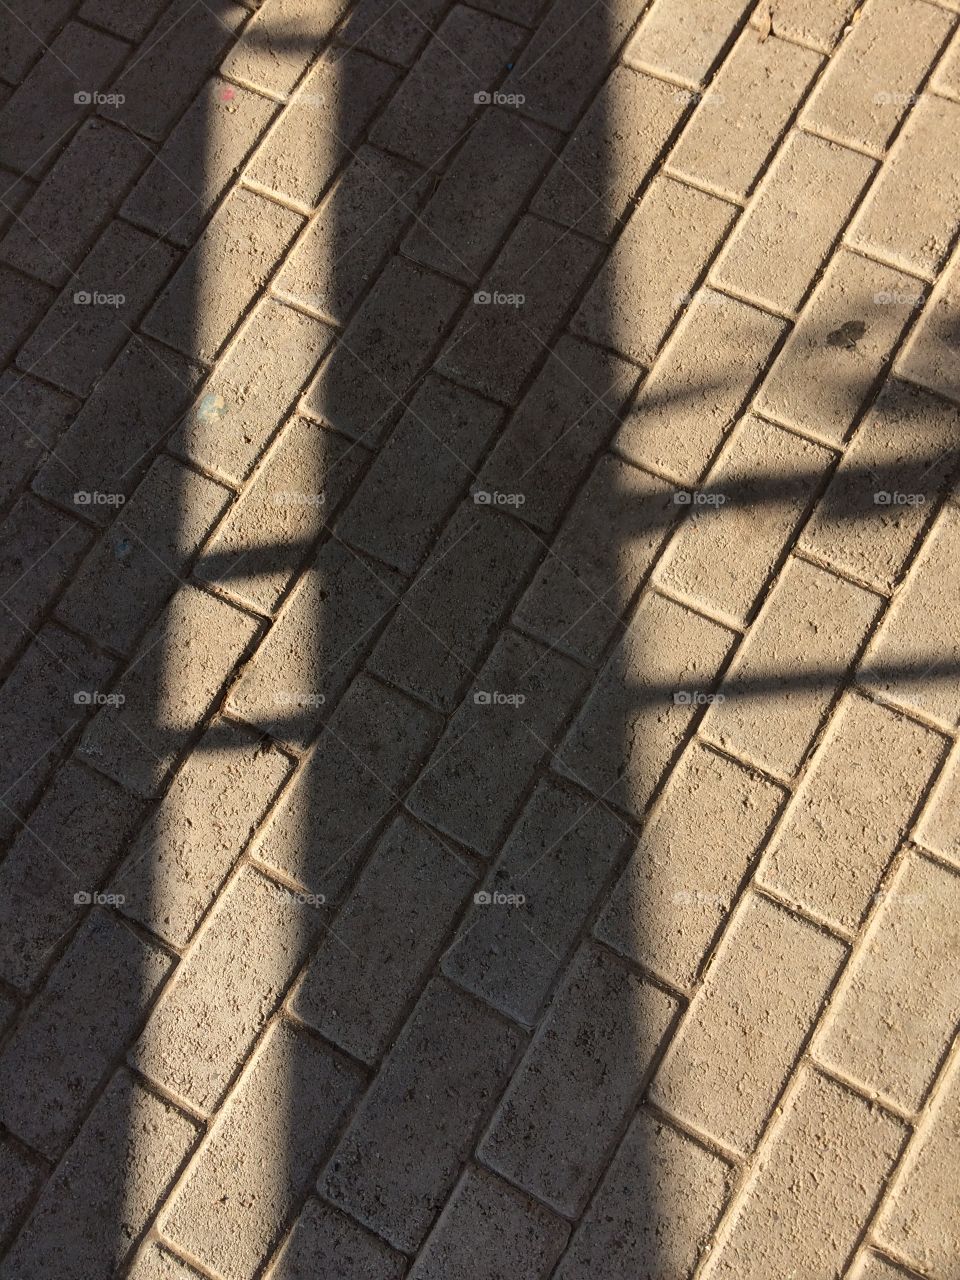 Shadows 